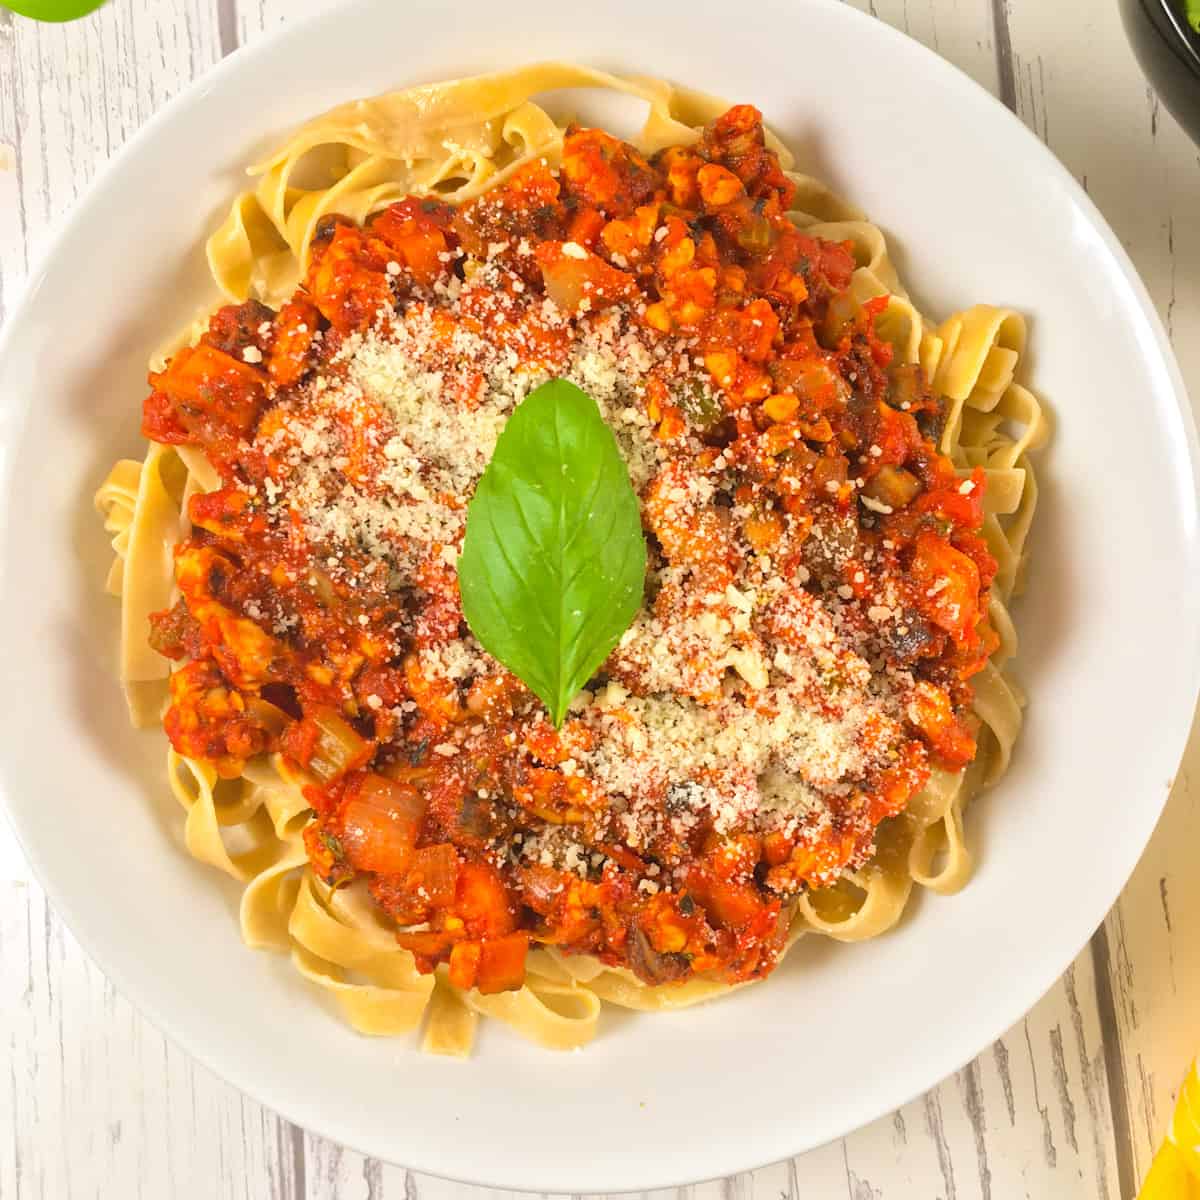 wfpb bolognese pasta sauce on noodles